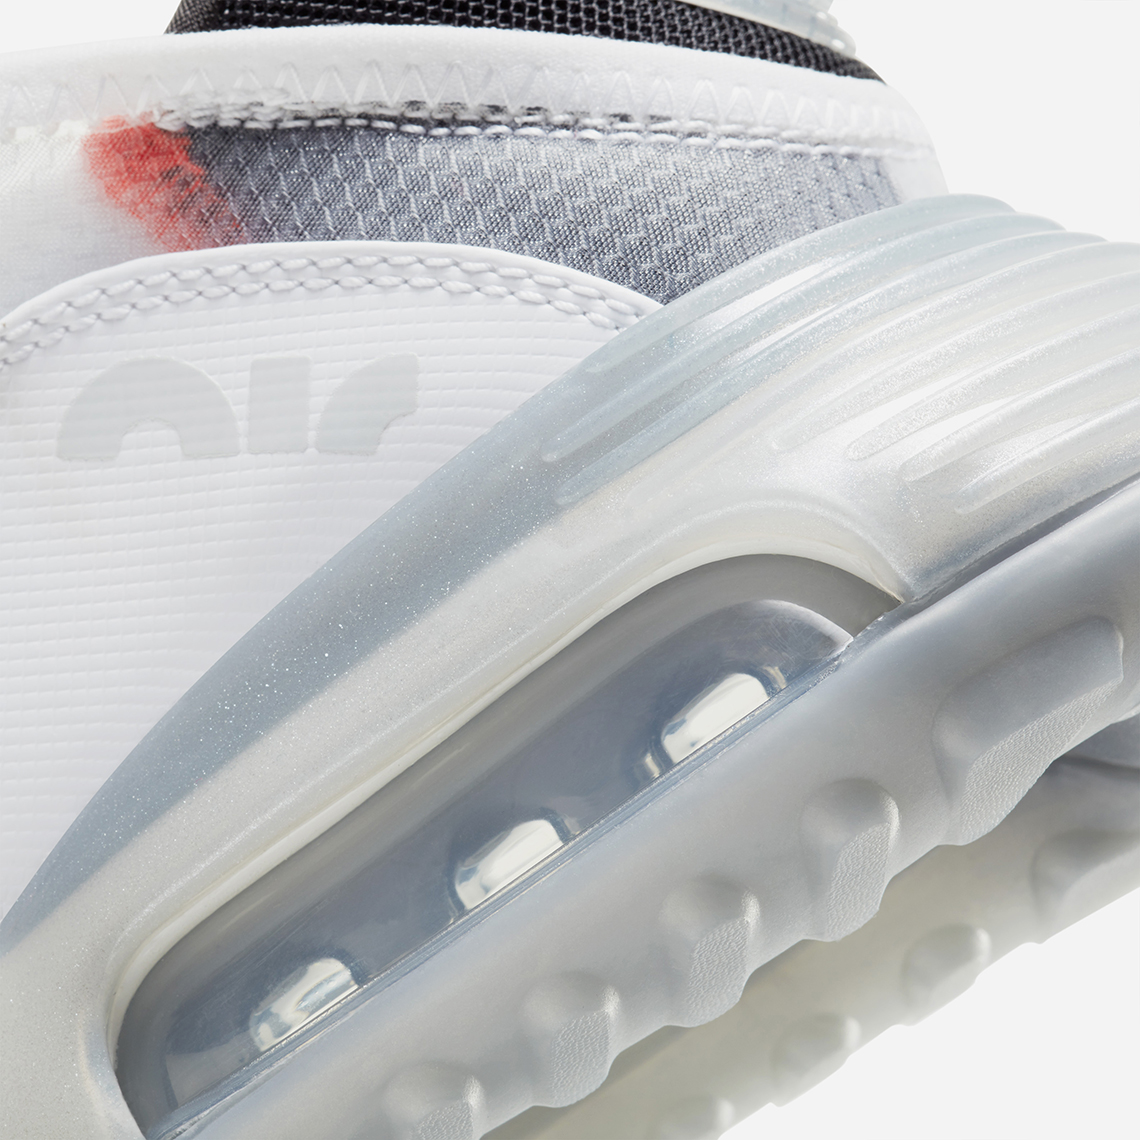 Nike Air Max 2090 Release Date 10